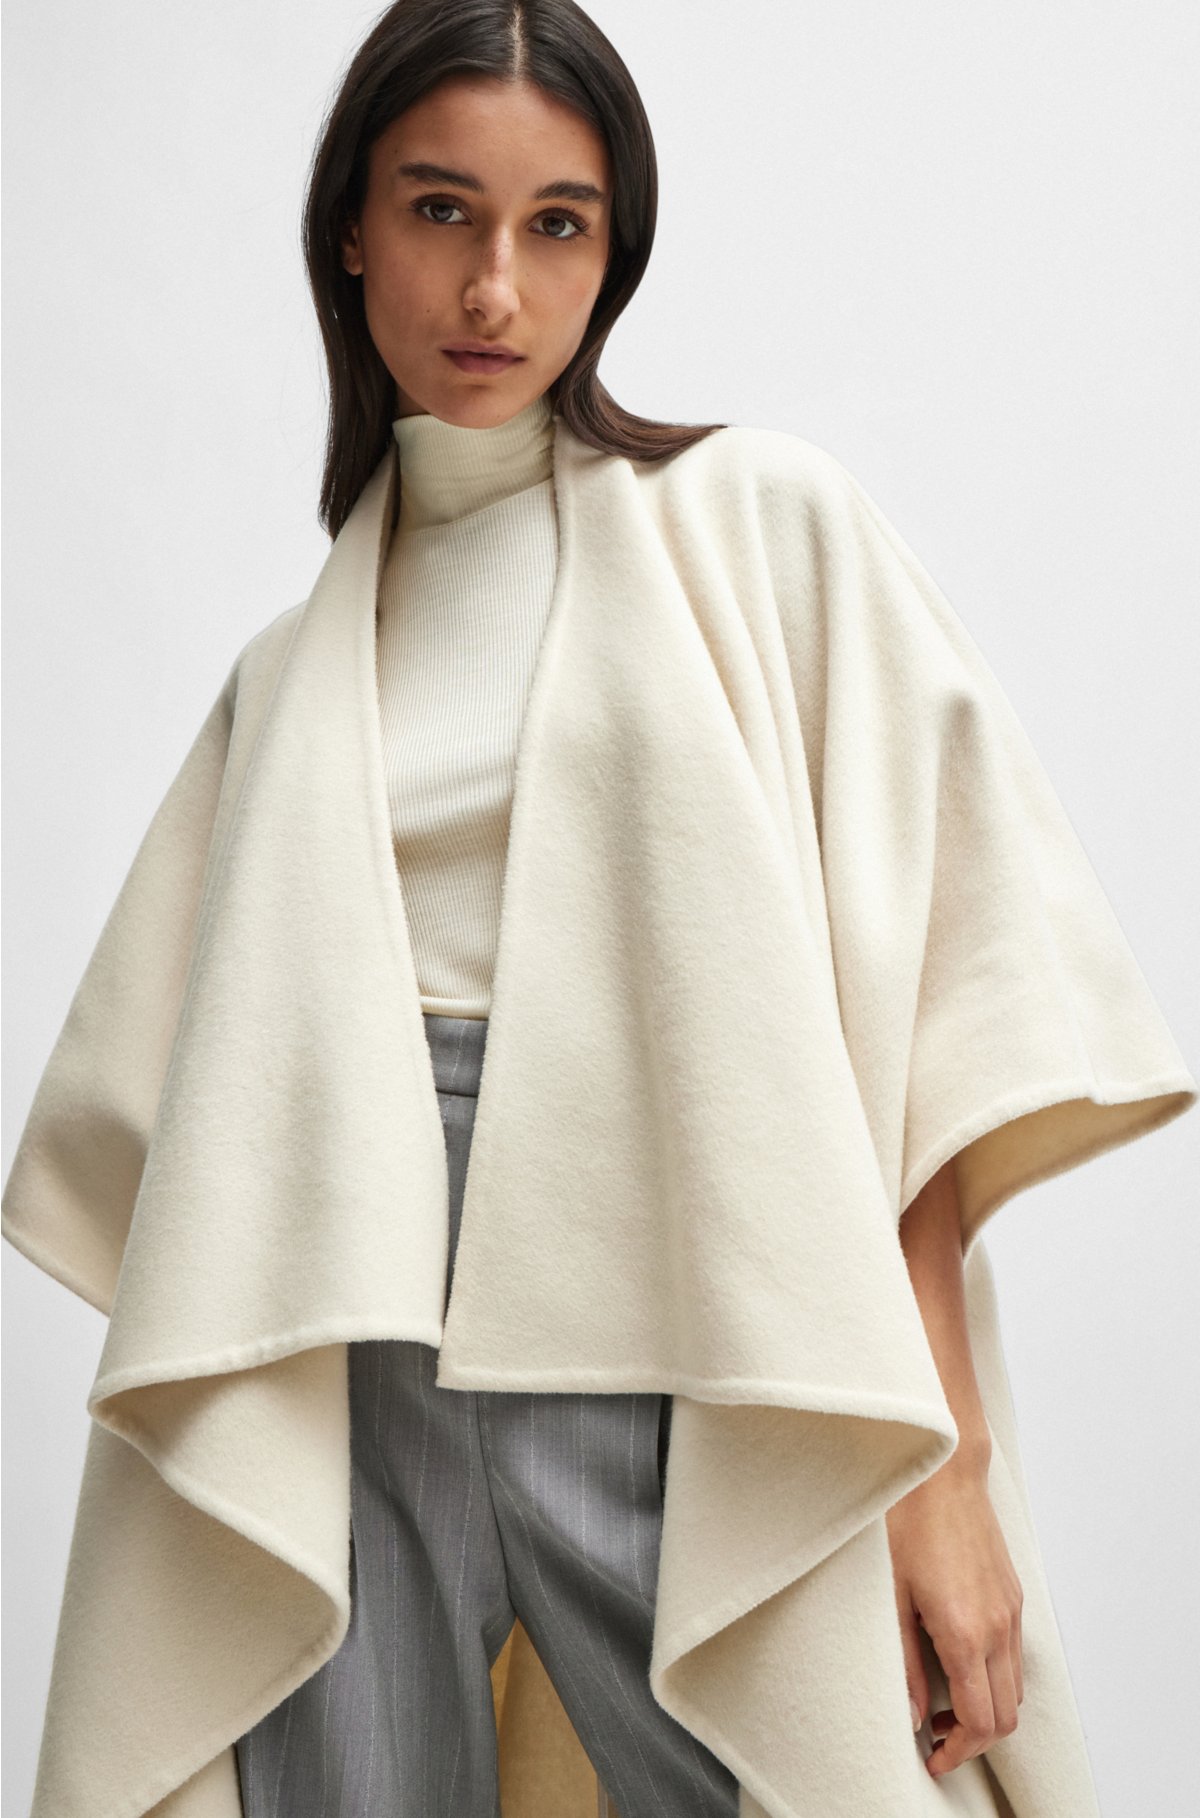 NAOMI x BOSS waterfall-front cape coat in virgin wool, Natural